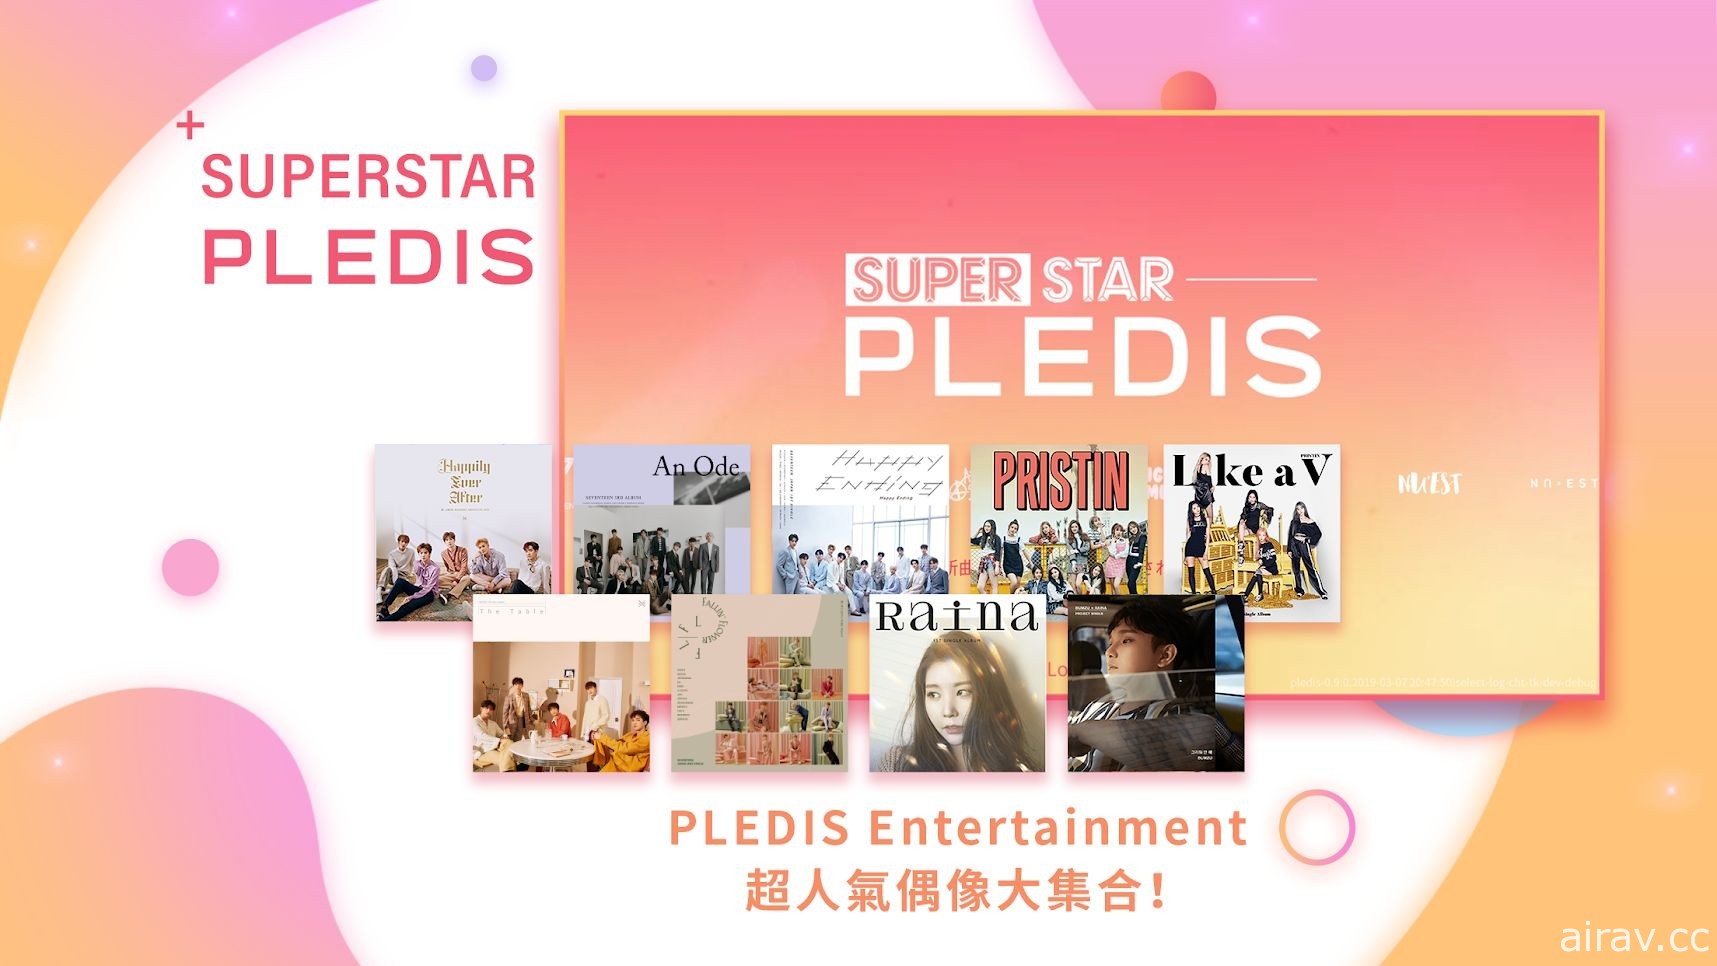 PLEDIS 娛樂音樂節奏遊戲《SUPERSTAR PLEDIS》宣布 2 月 26 日結束服務